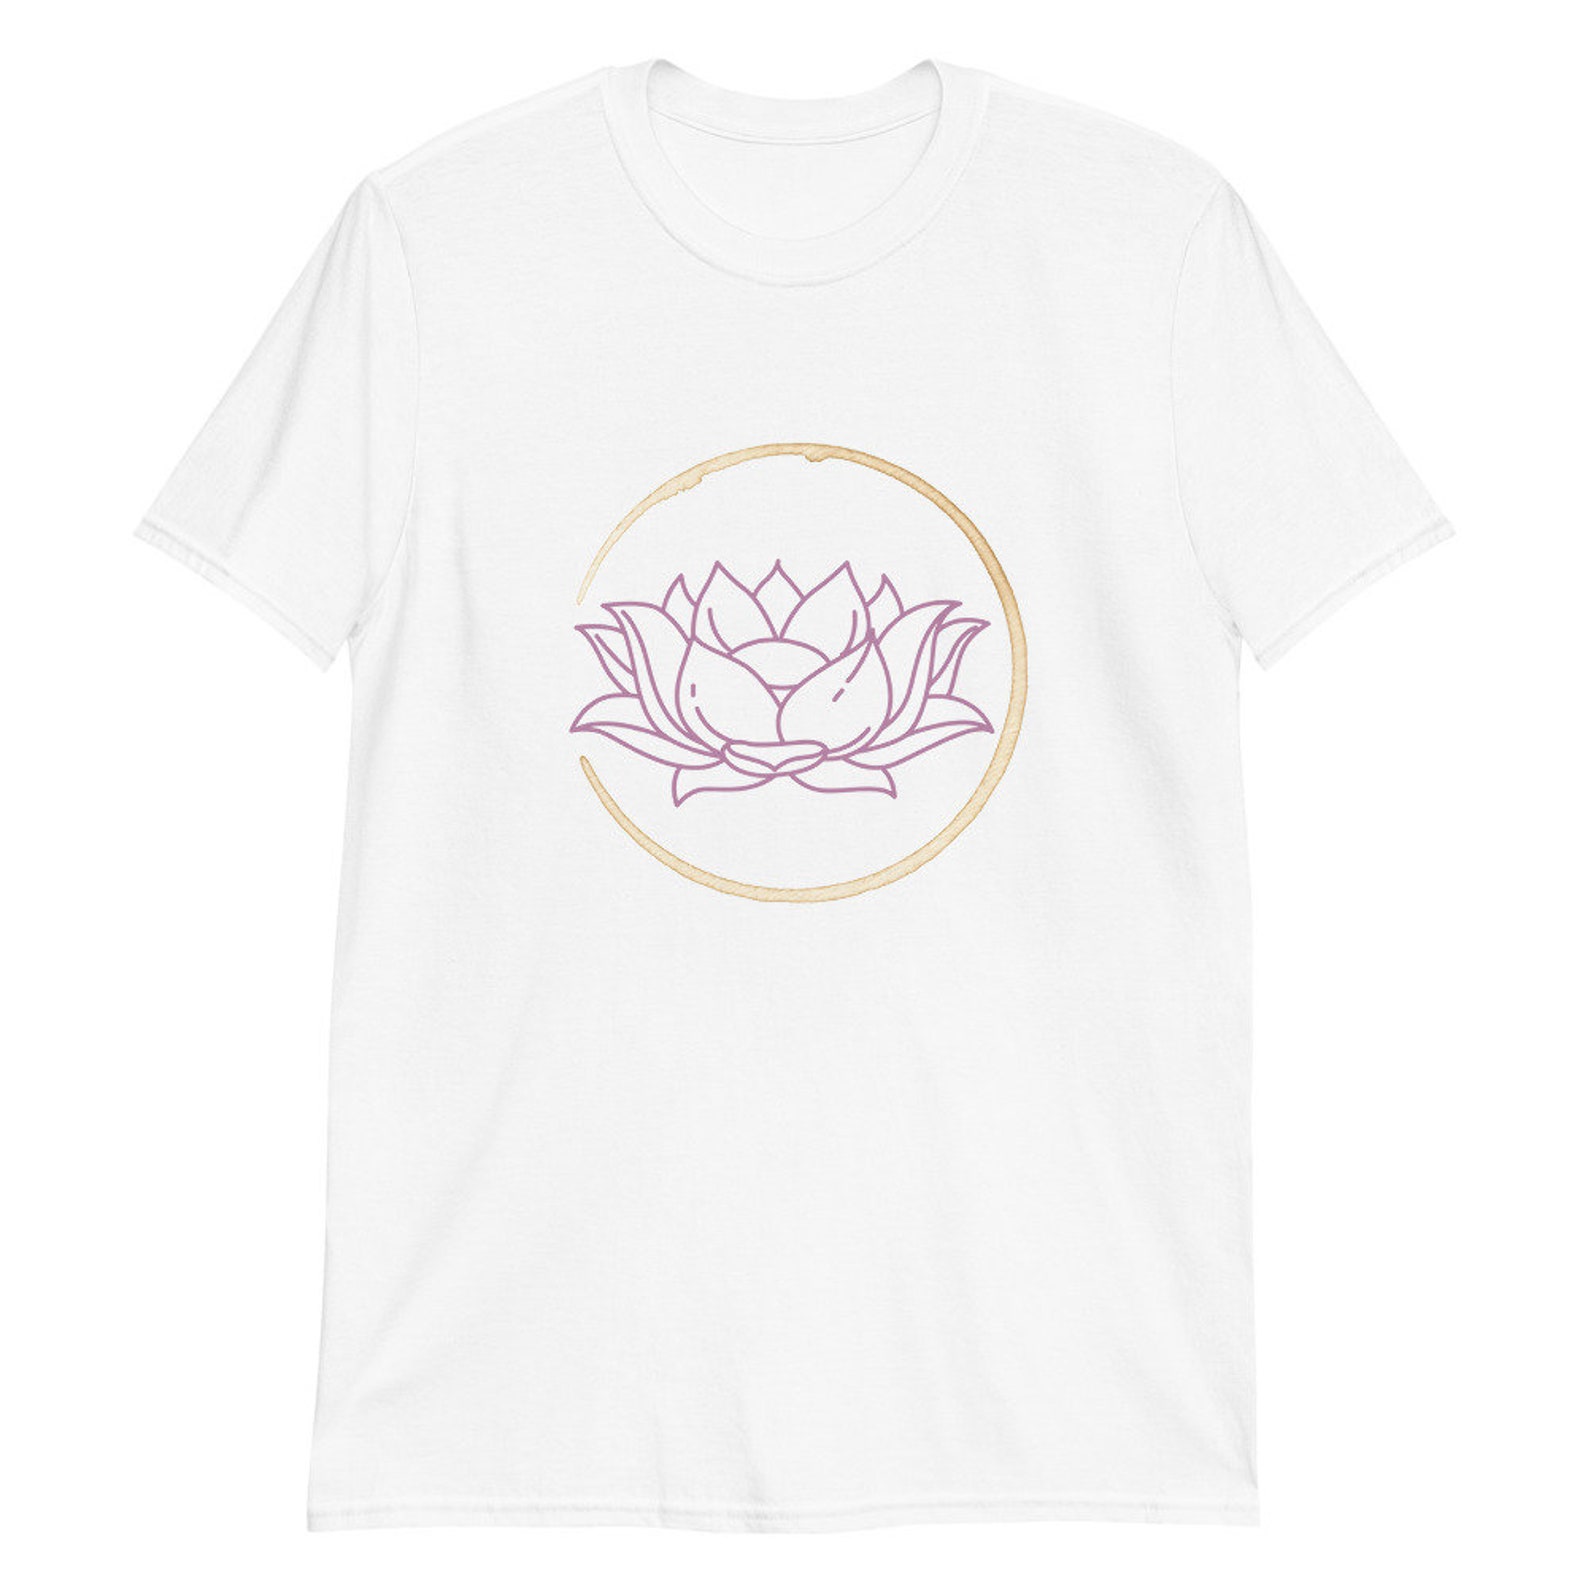 Lotus Flower Shirt yoga shirt gym shirt boho gift for her | Etsy